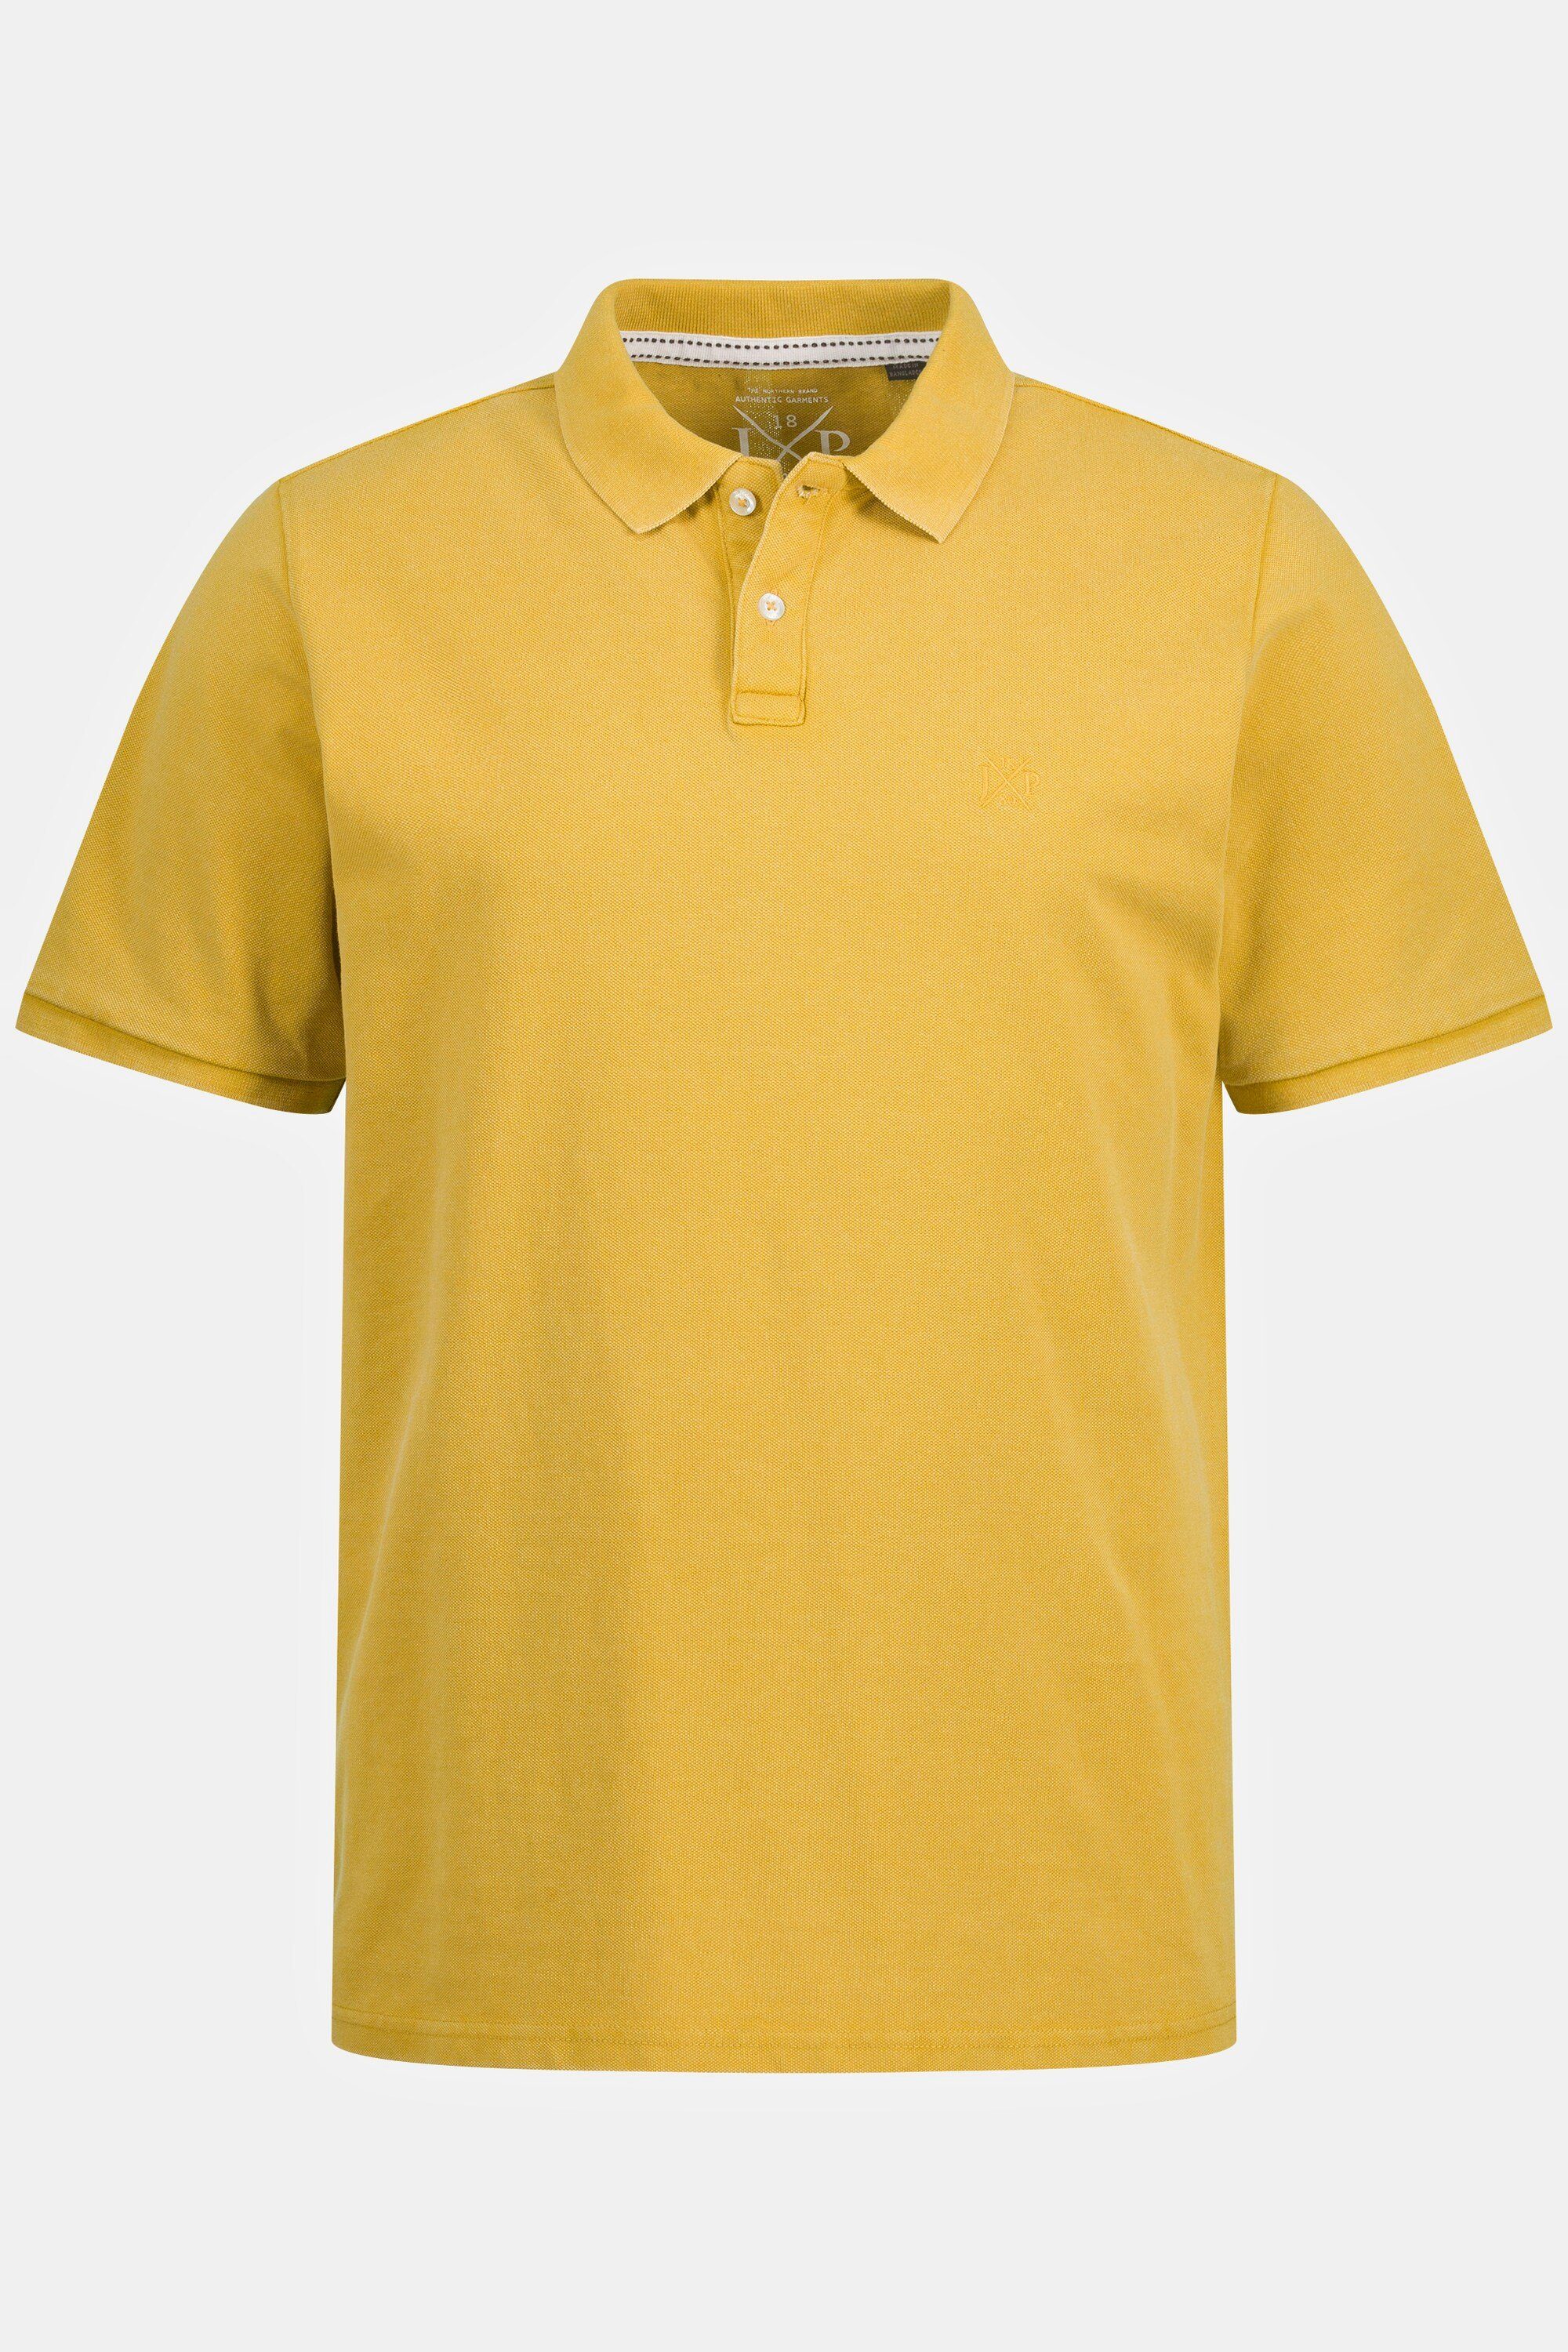 JP1880 Poloshirt Poloshirt gelb Waschung Halbarm Piqué Vintage